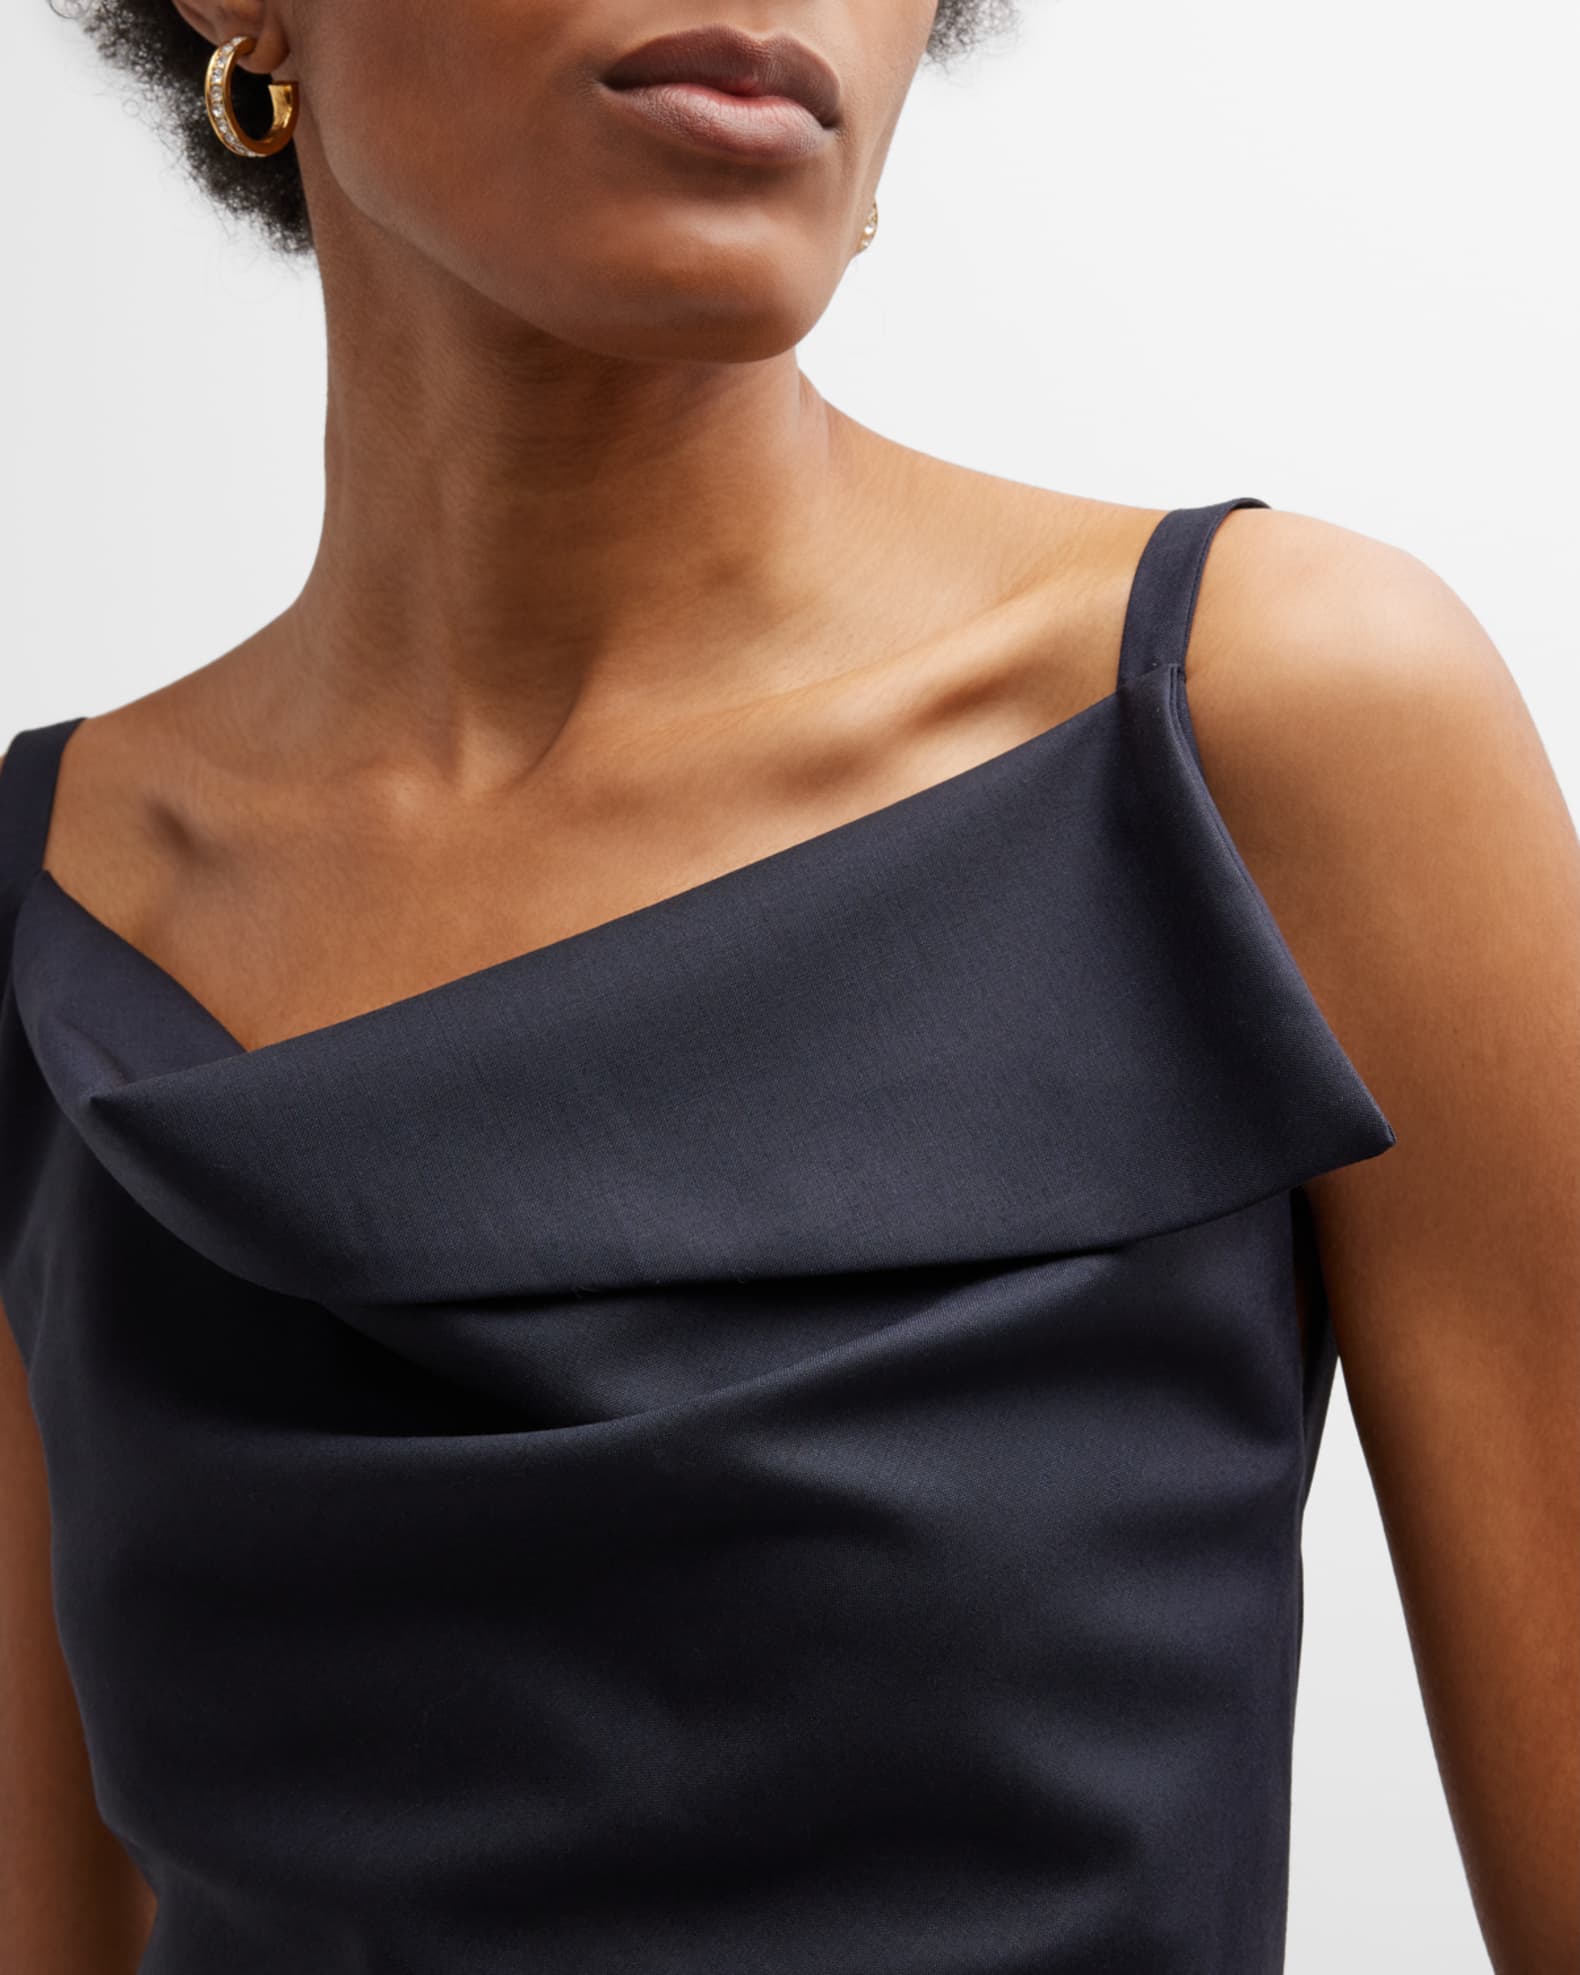 THE ROW Berna Draped Wool Midi Dress with Open Back | Neiman Marcus